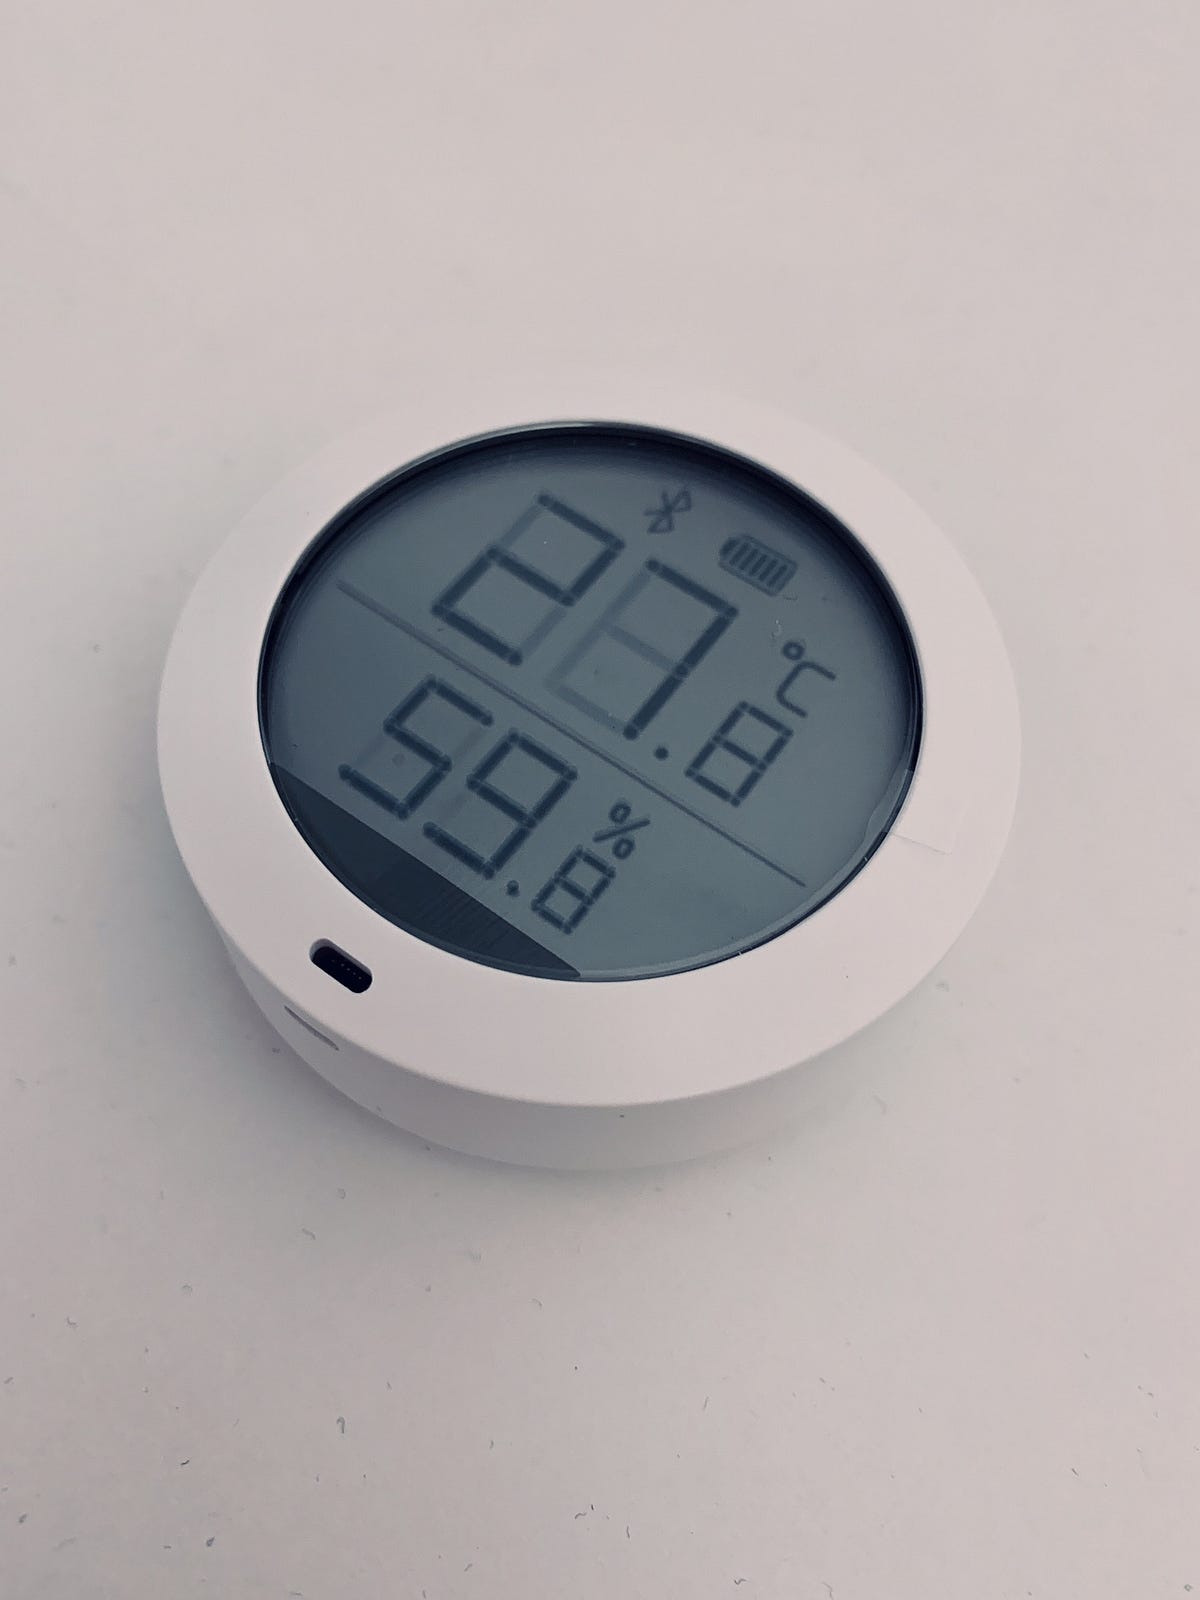 Use Xiaomi Mi Bluetooth Temperature and Humidity Sensor as HomeKit  accessory [UPDATE 23.12.2019], by Mr. Jakub